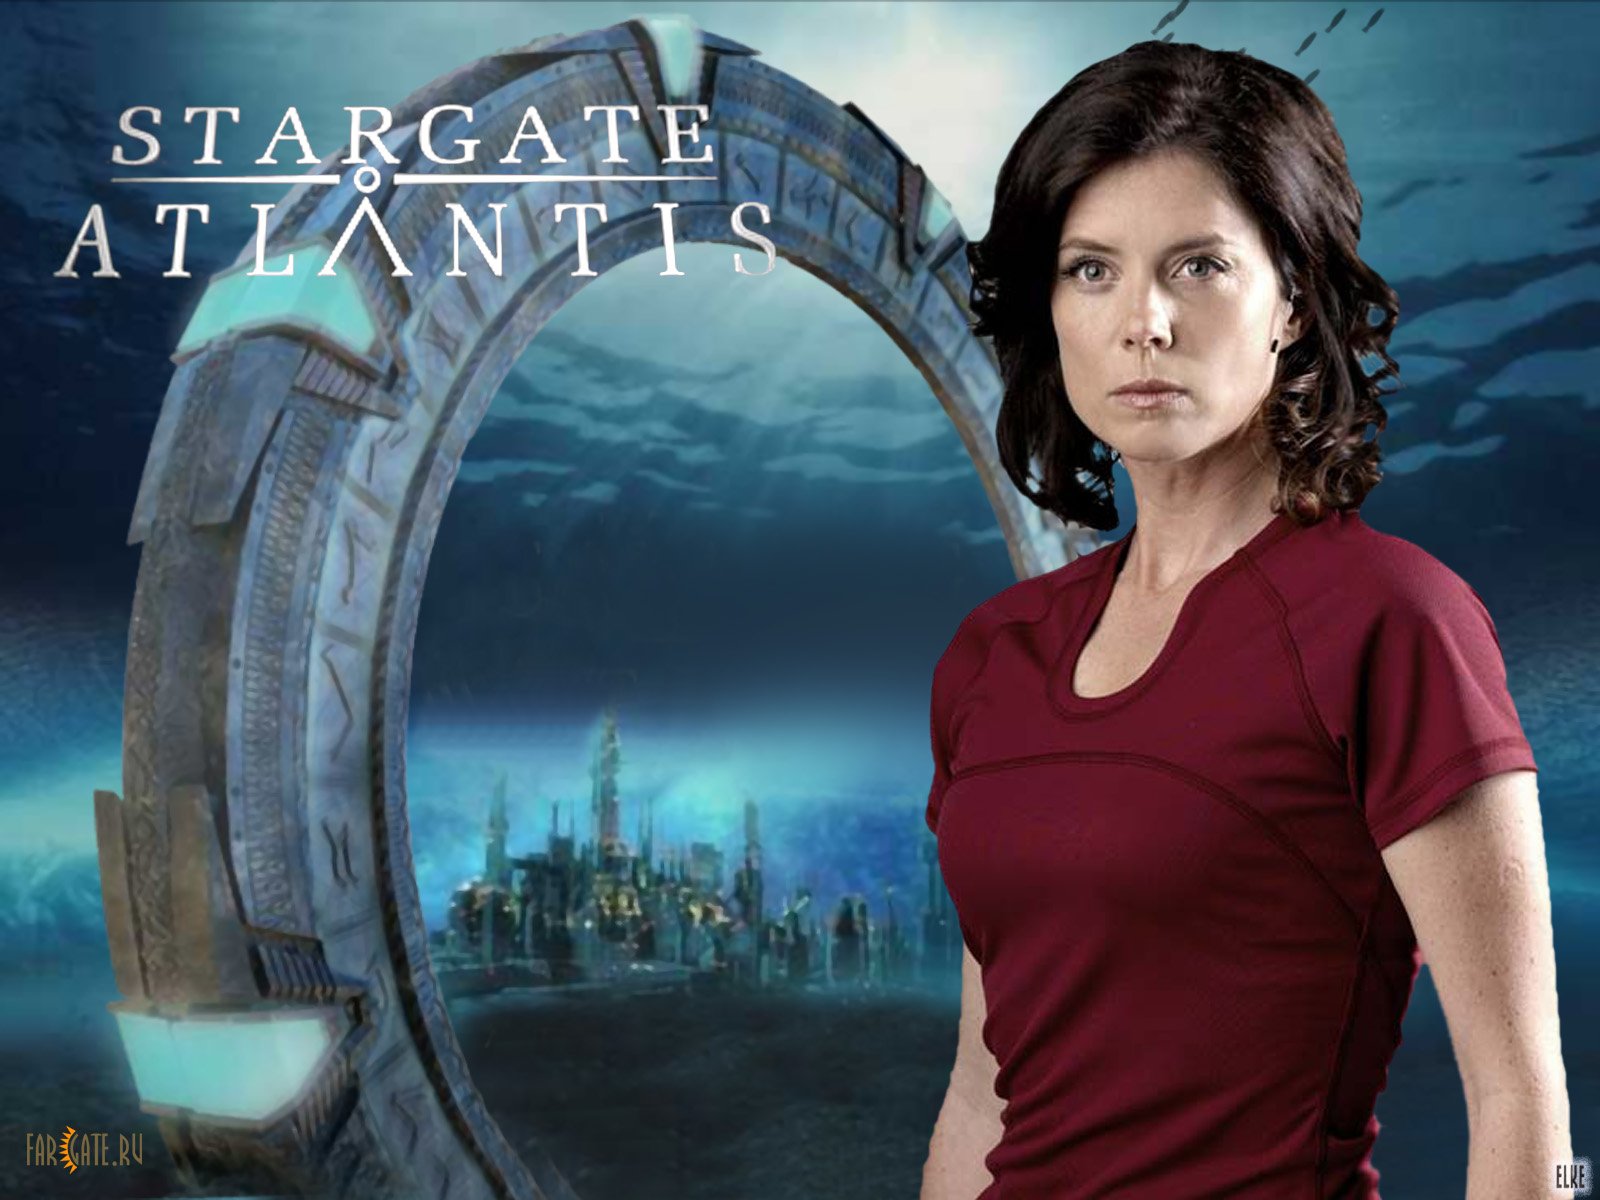 Stargate Atlantis Adventure Television Series Action Drama Sci